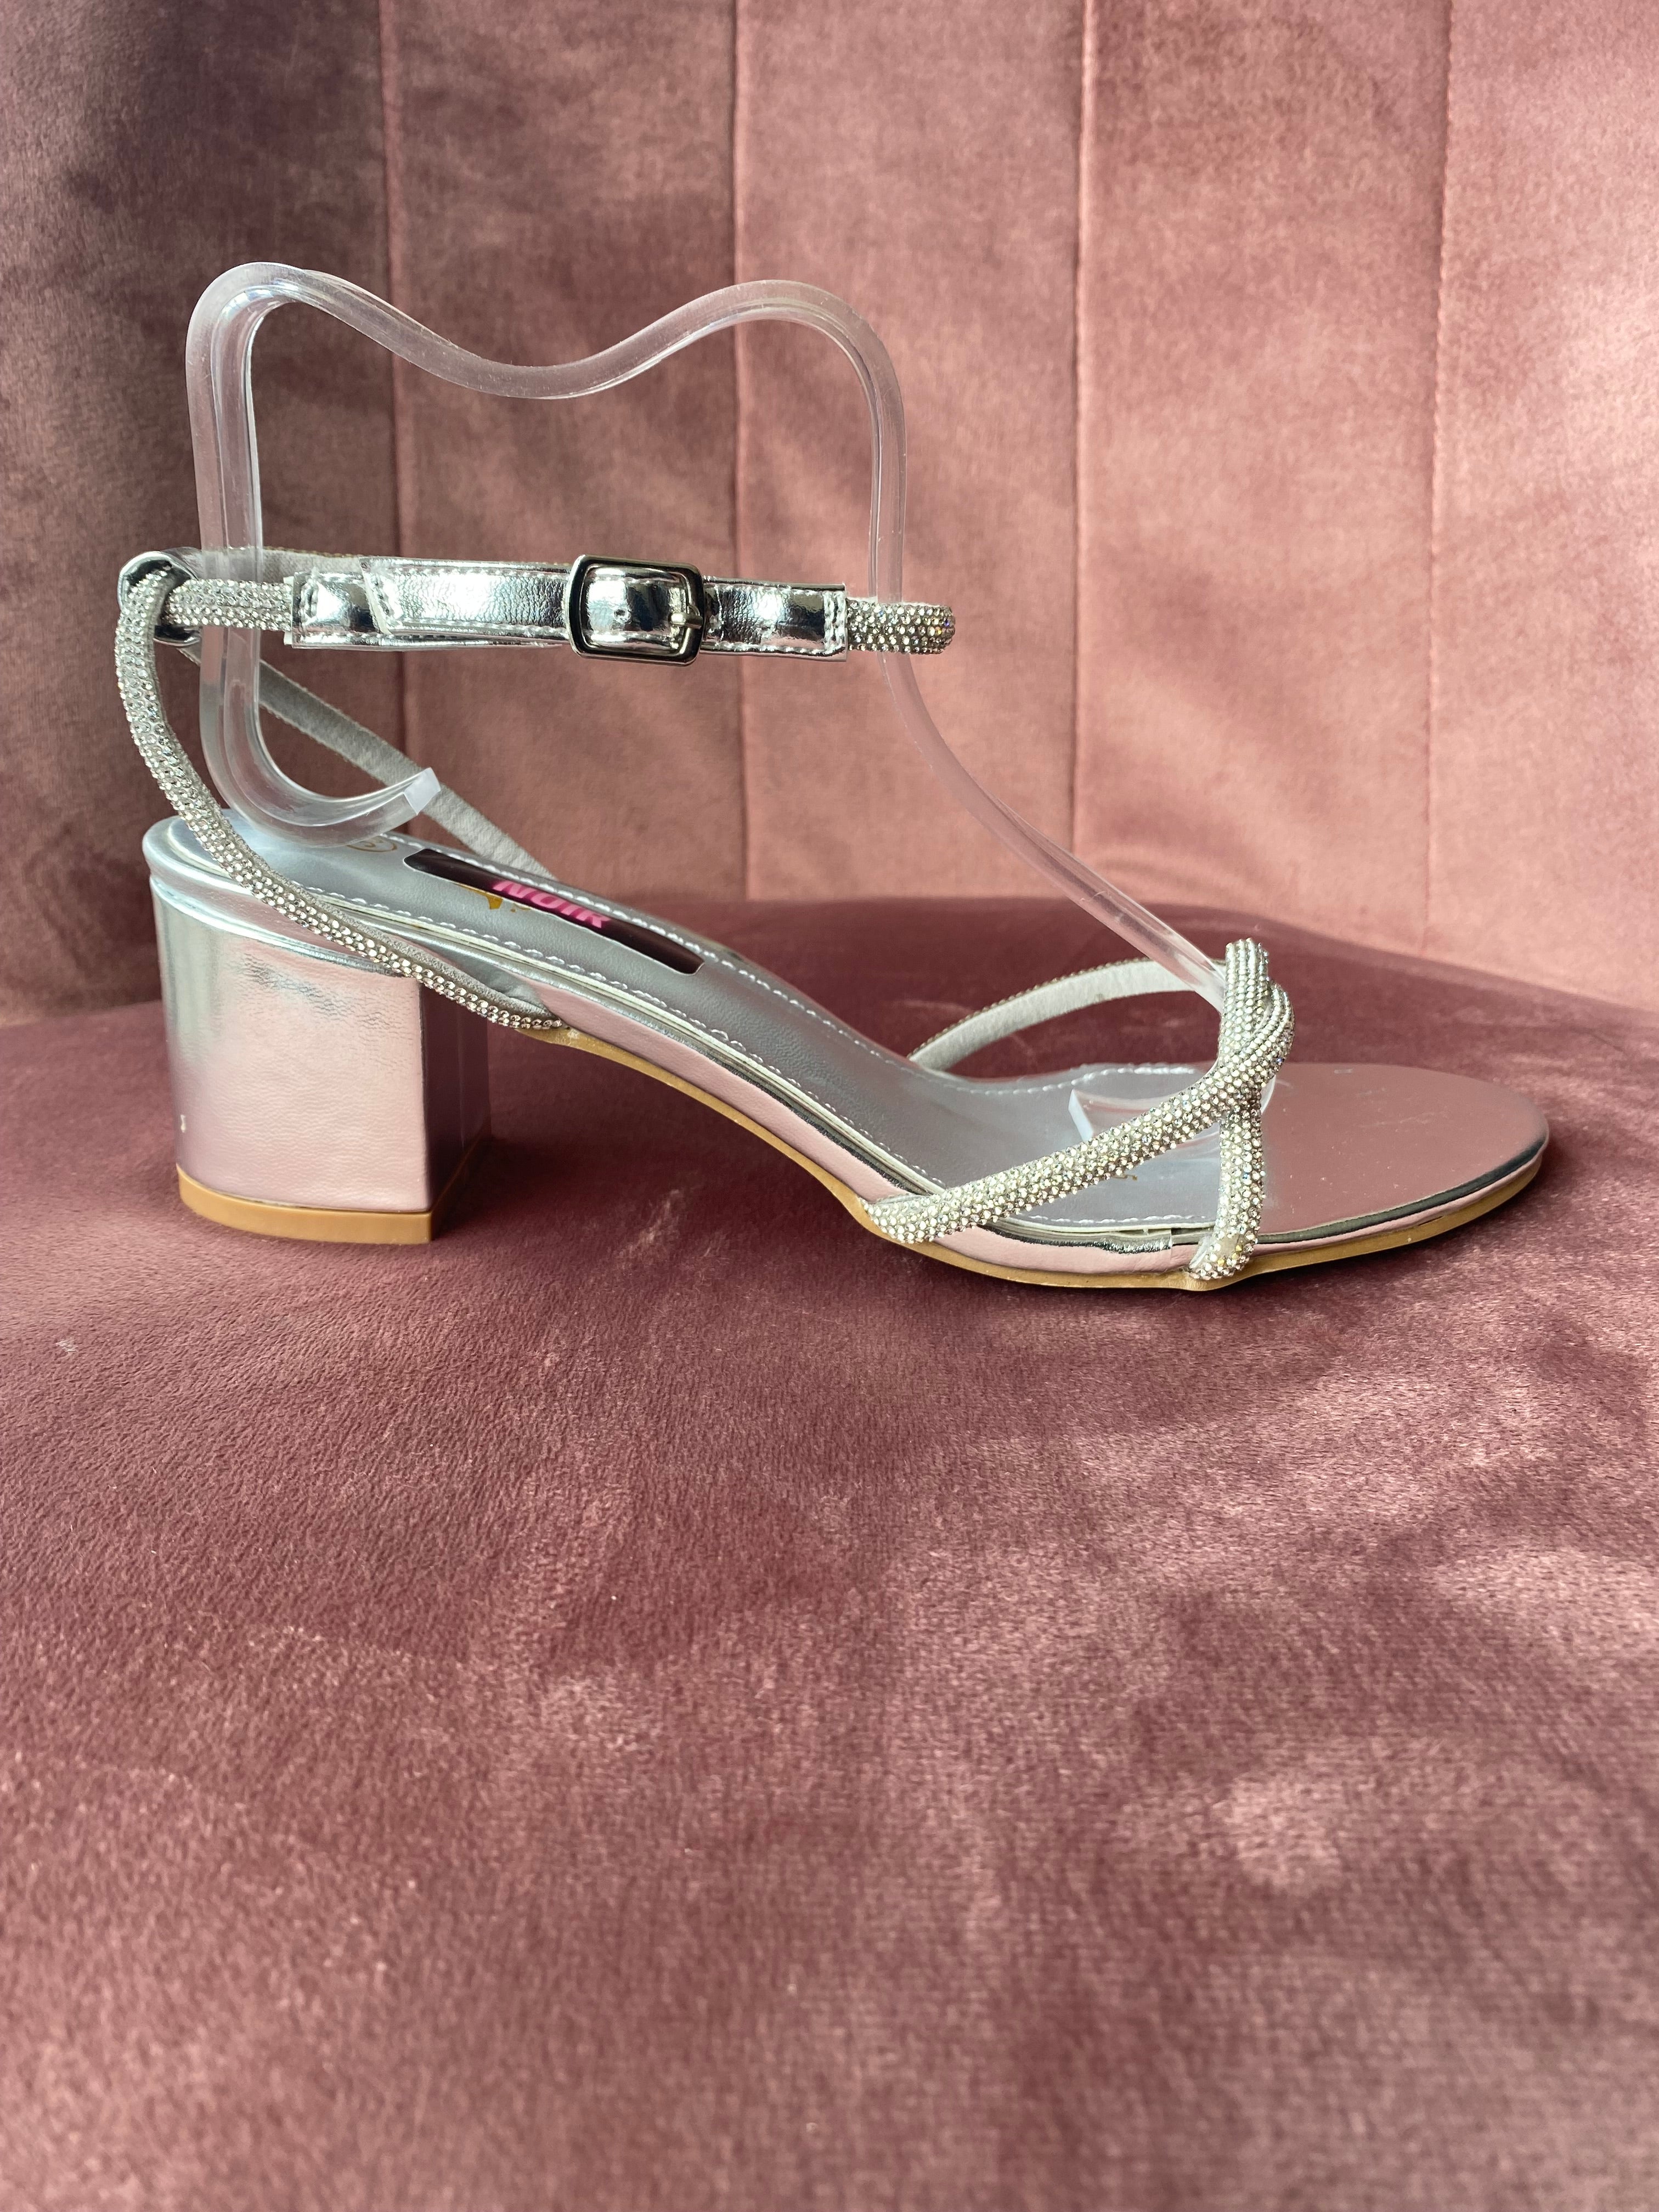 Buy Women Silver Party Sandals Online | SKU: 35-4636-27-37-Metro Shoes